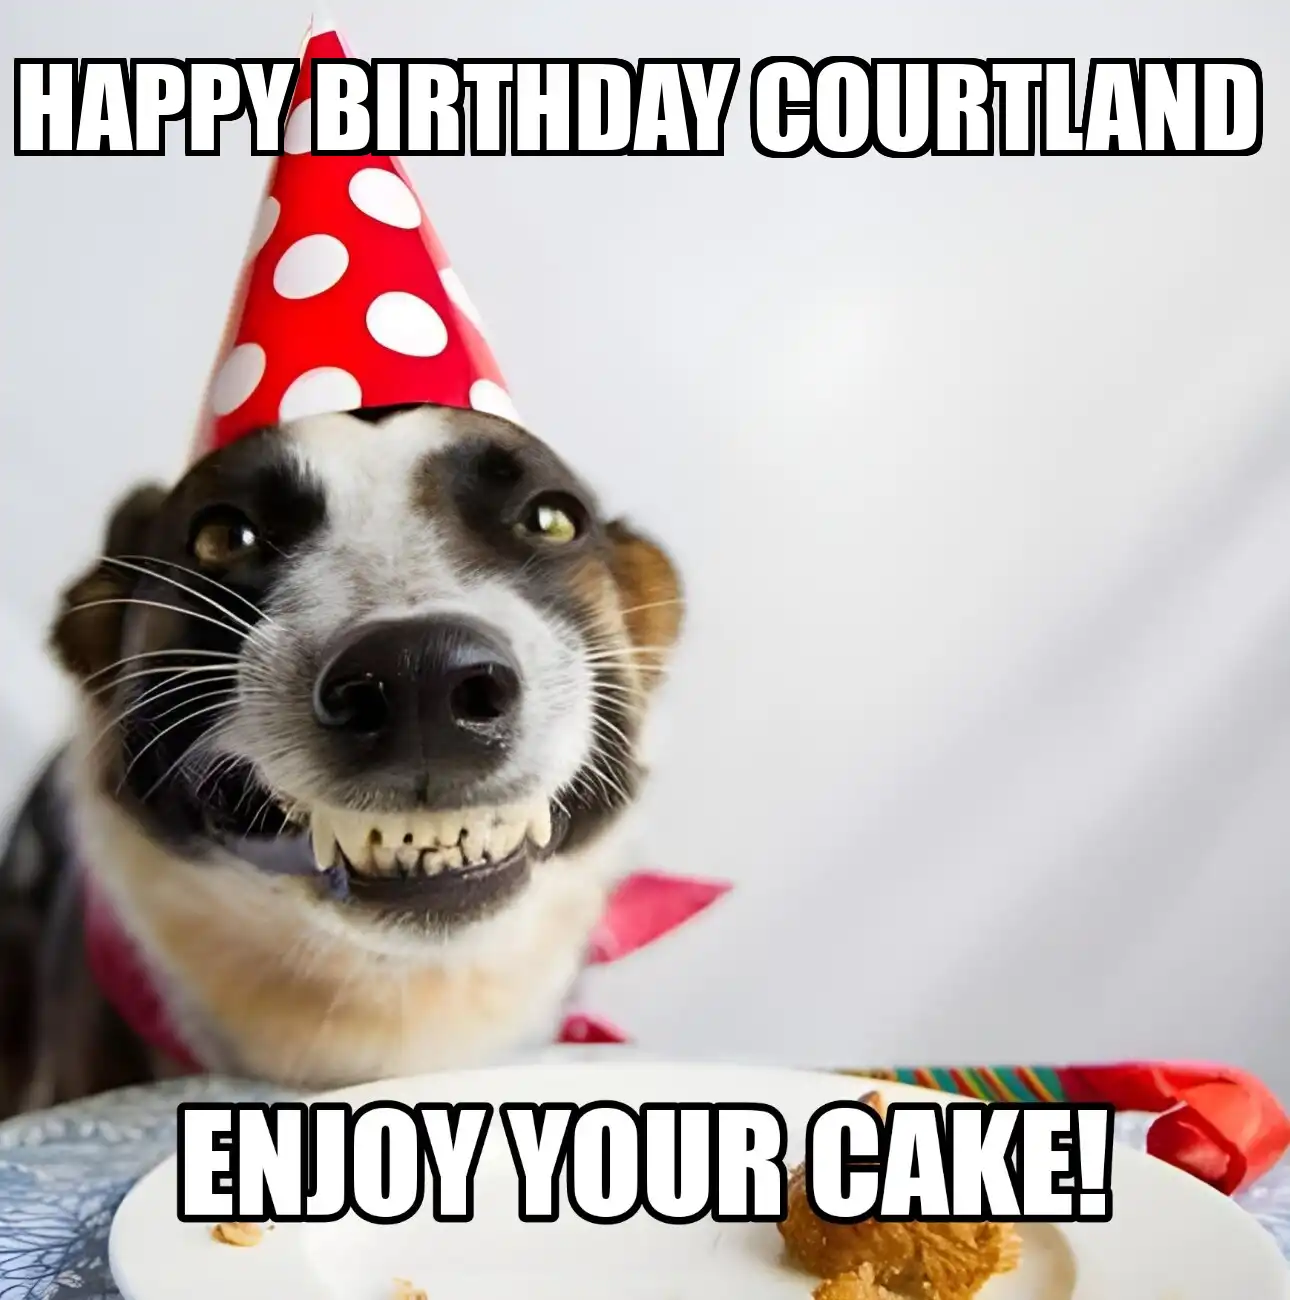 Happy Birthday Courtland Enjoy Your Cake Dog Meme